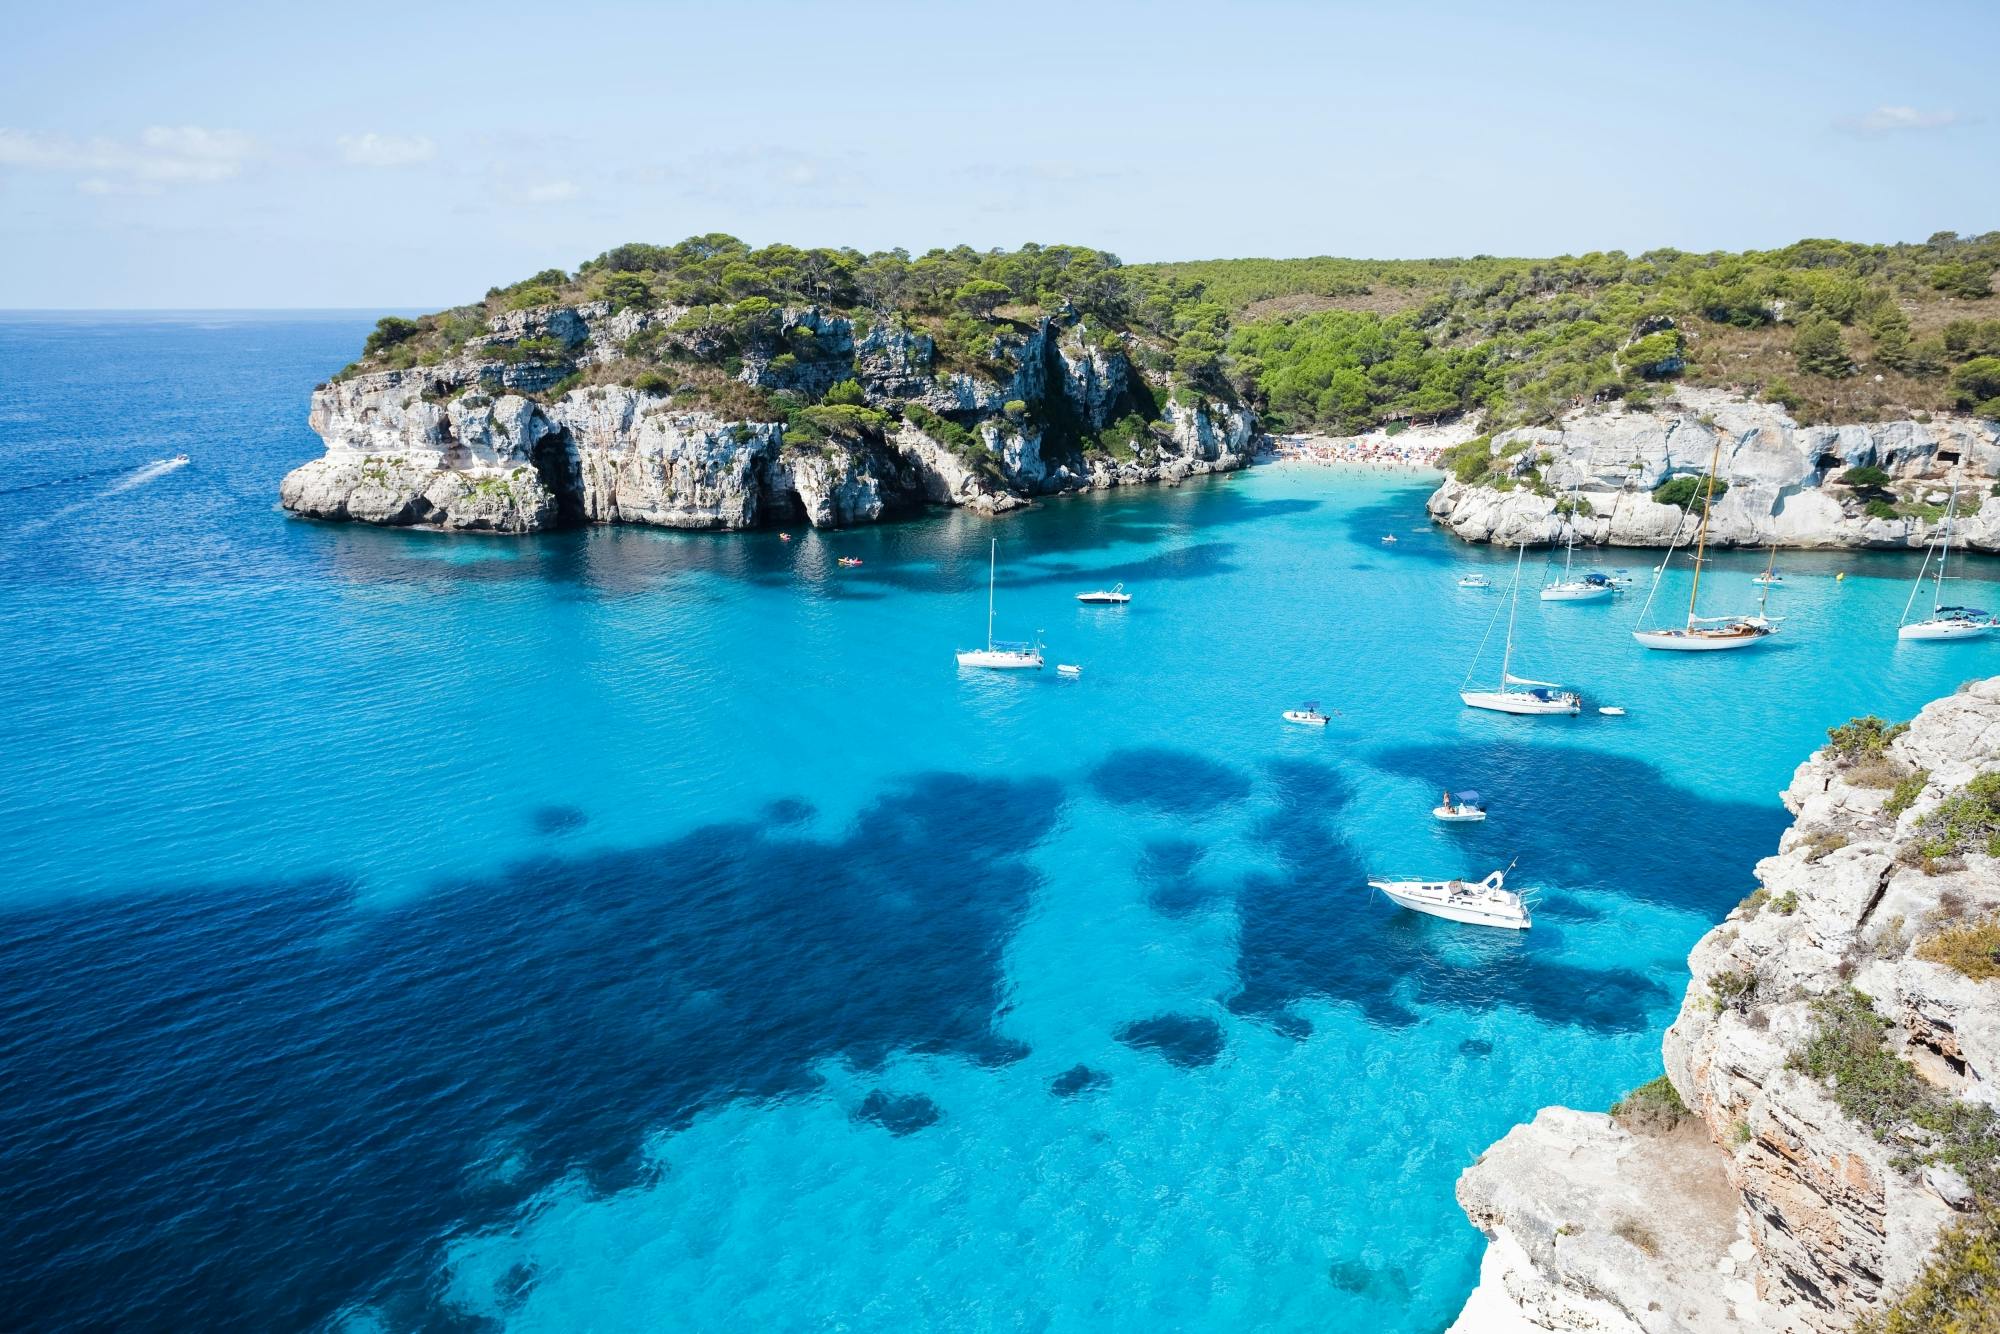 Ocean Cat Menorca Coastline Boat Trip with Transfers